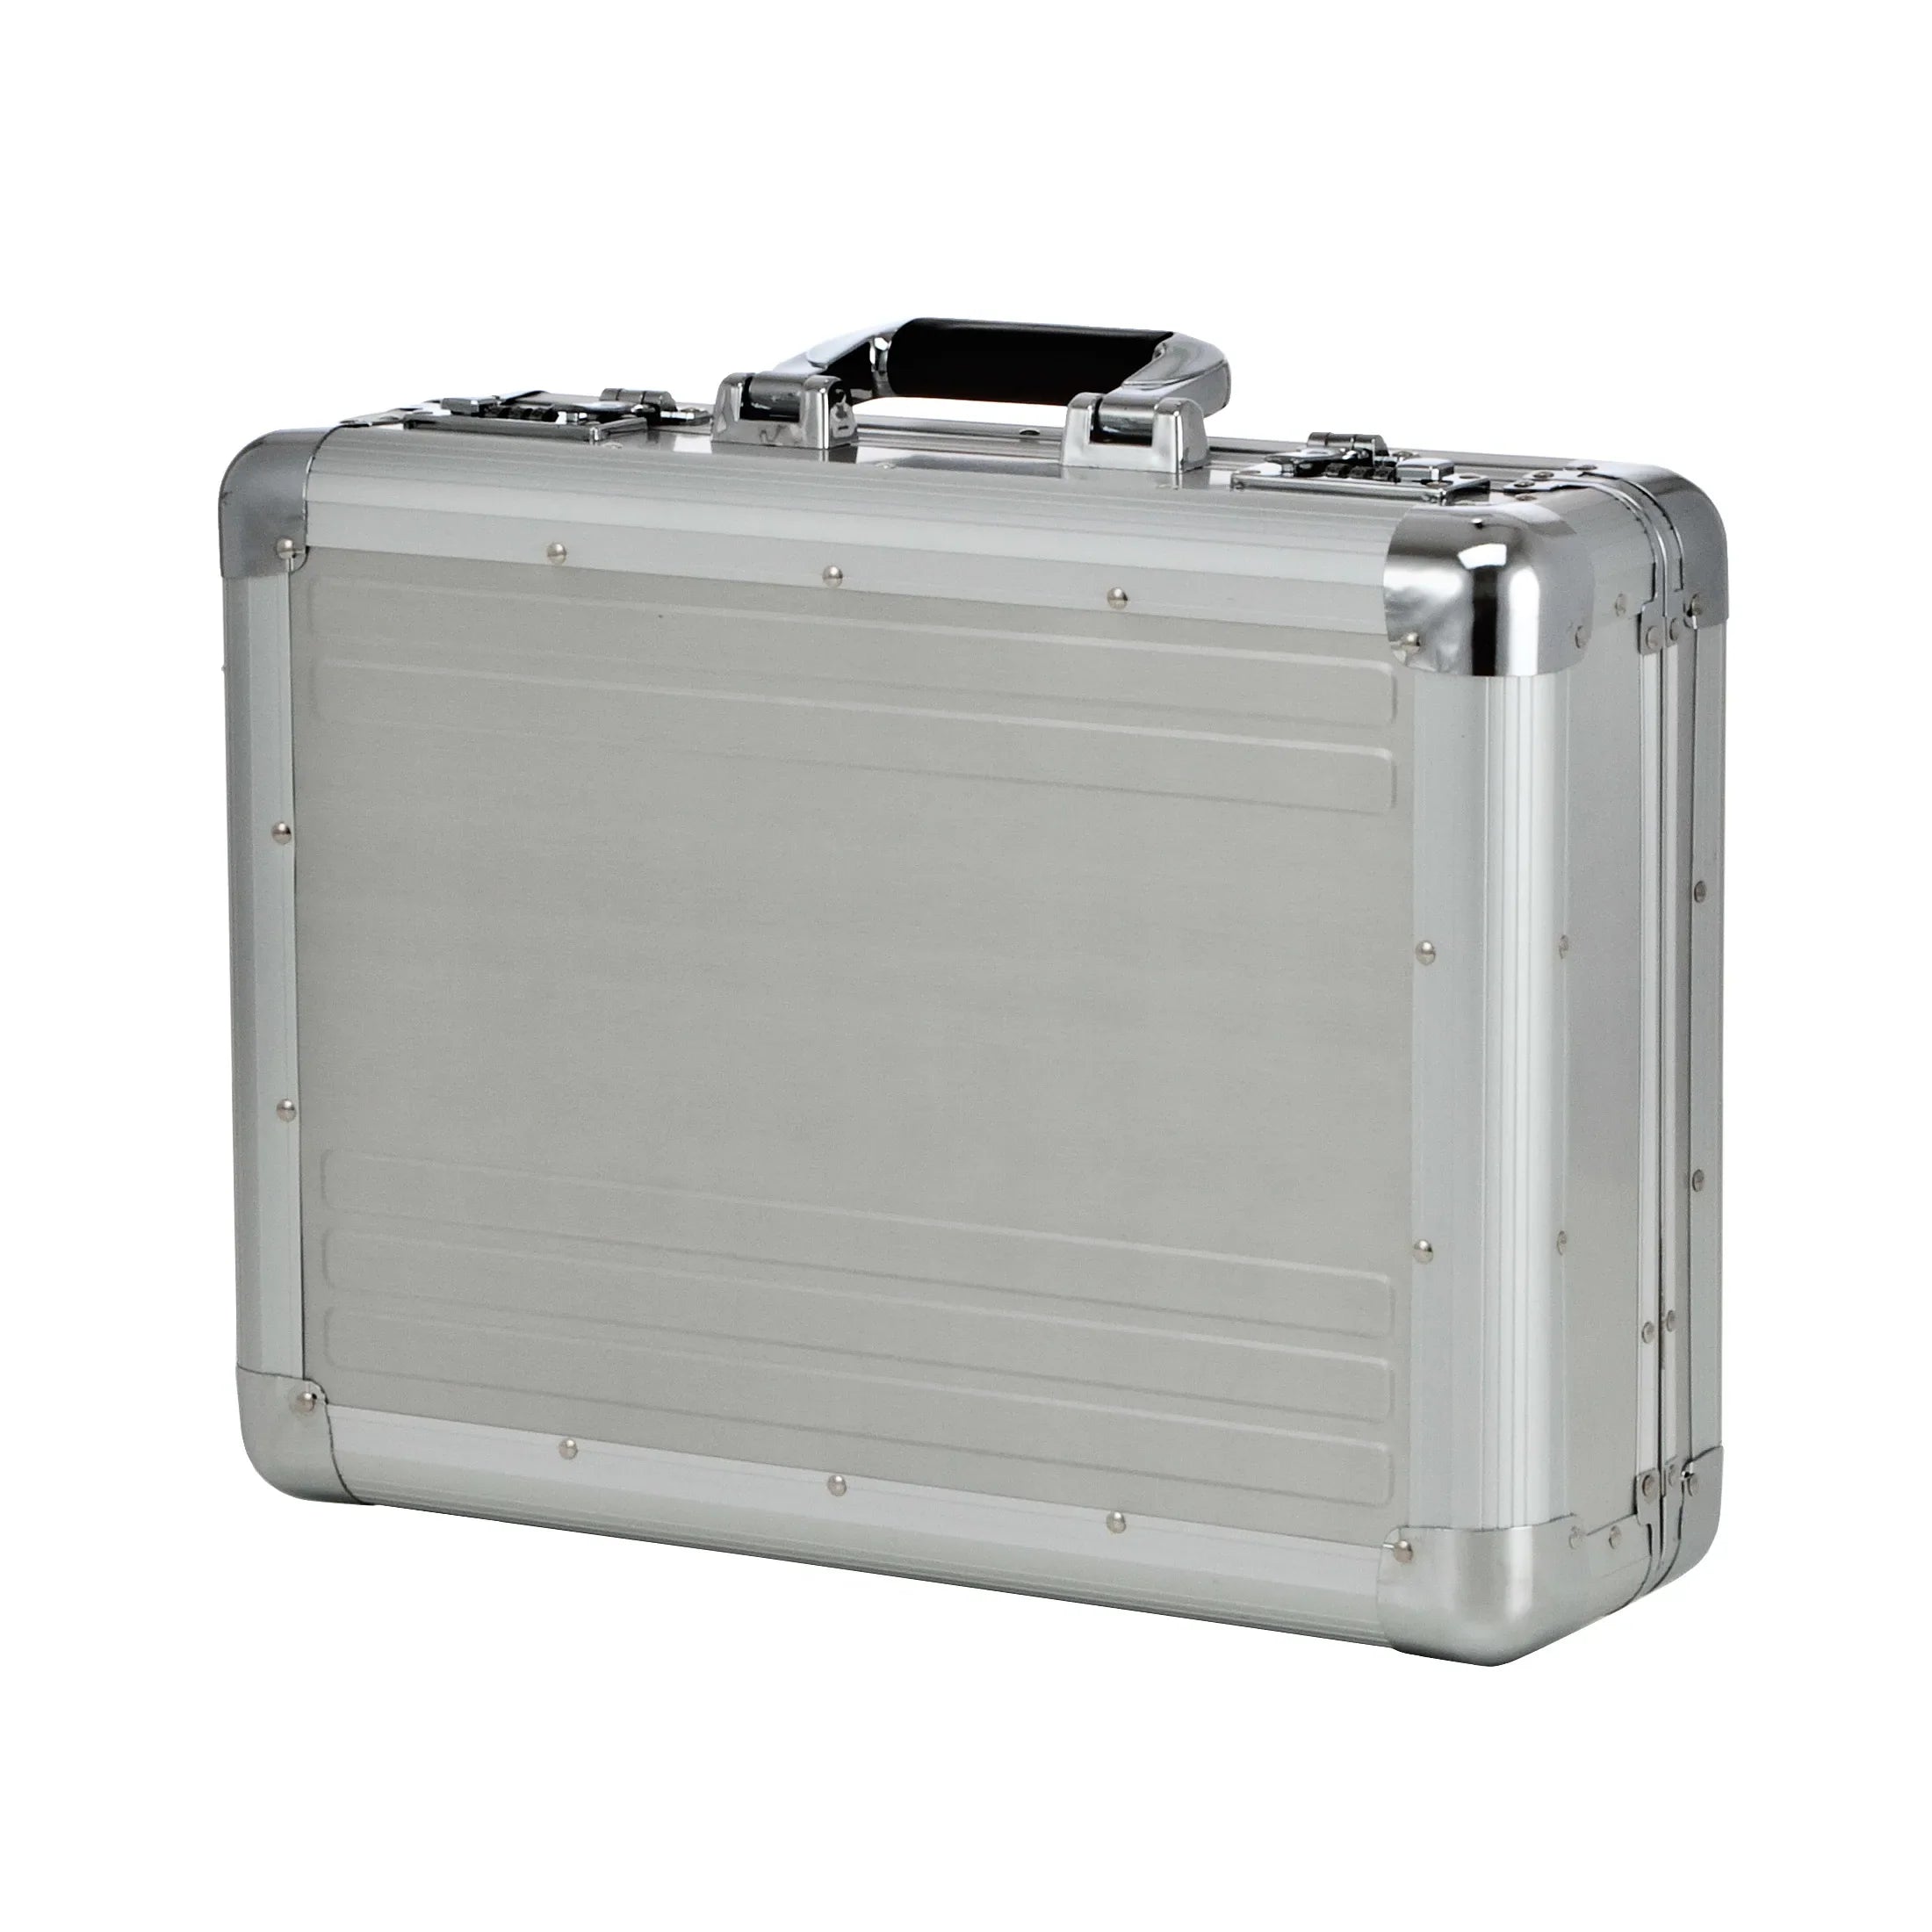 Dermata Business large aluminum briefcase 46 cm - silver